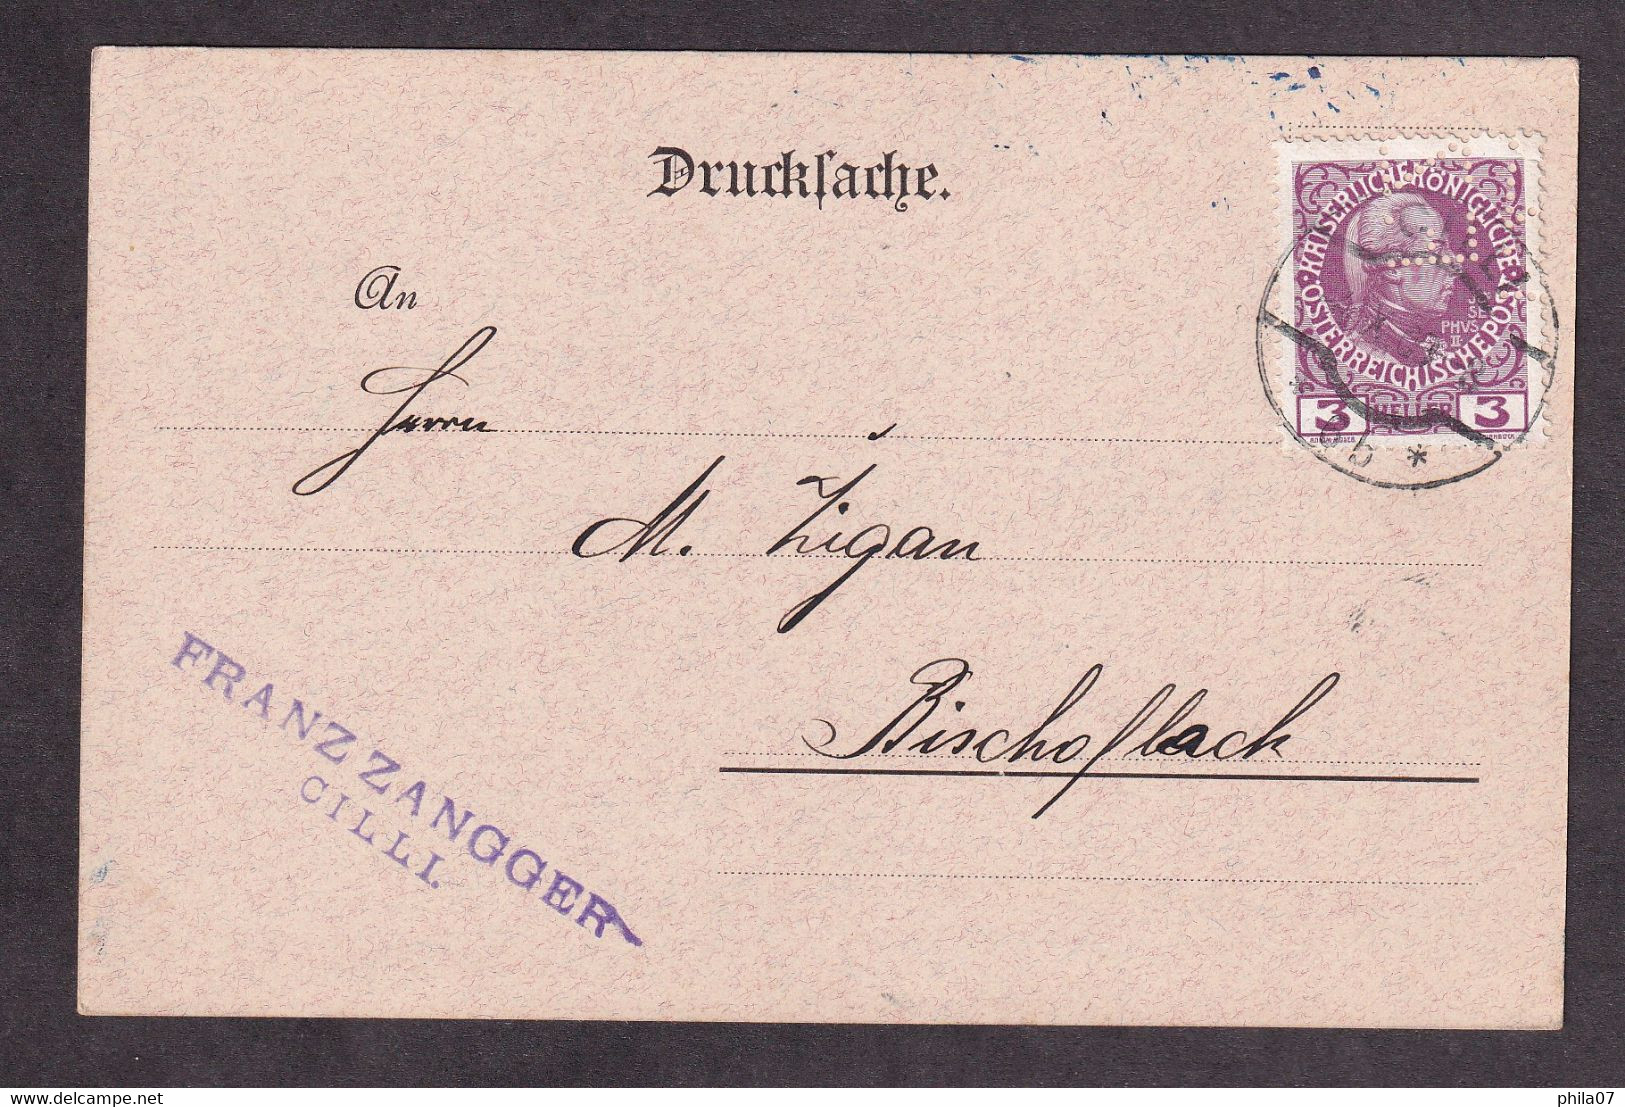 Austria/Slovenia - Business Stationery Franked With Stamp With Perfin F.Z. (Franz Zangger) And Sent From Celje To Škofja - Briefe U. Dokumente